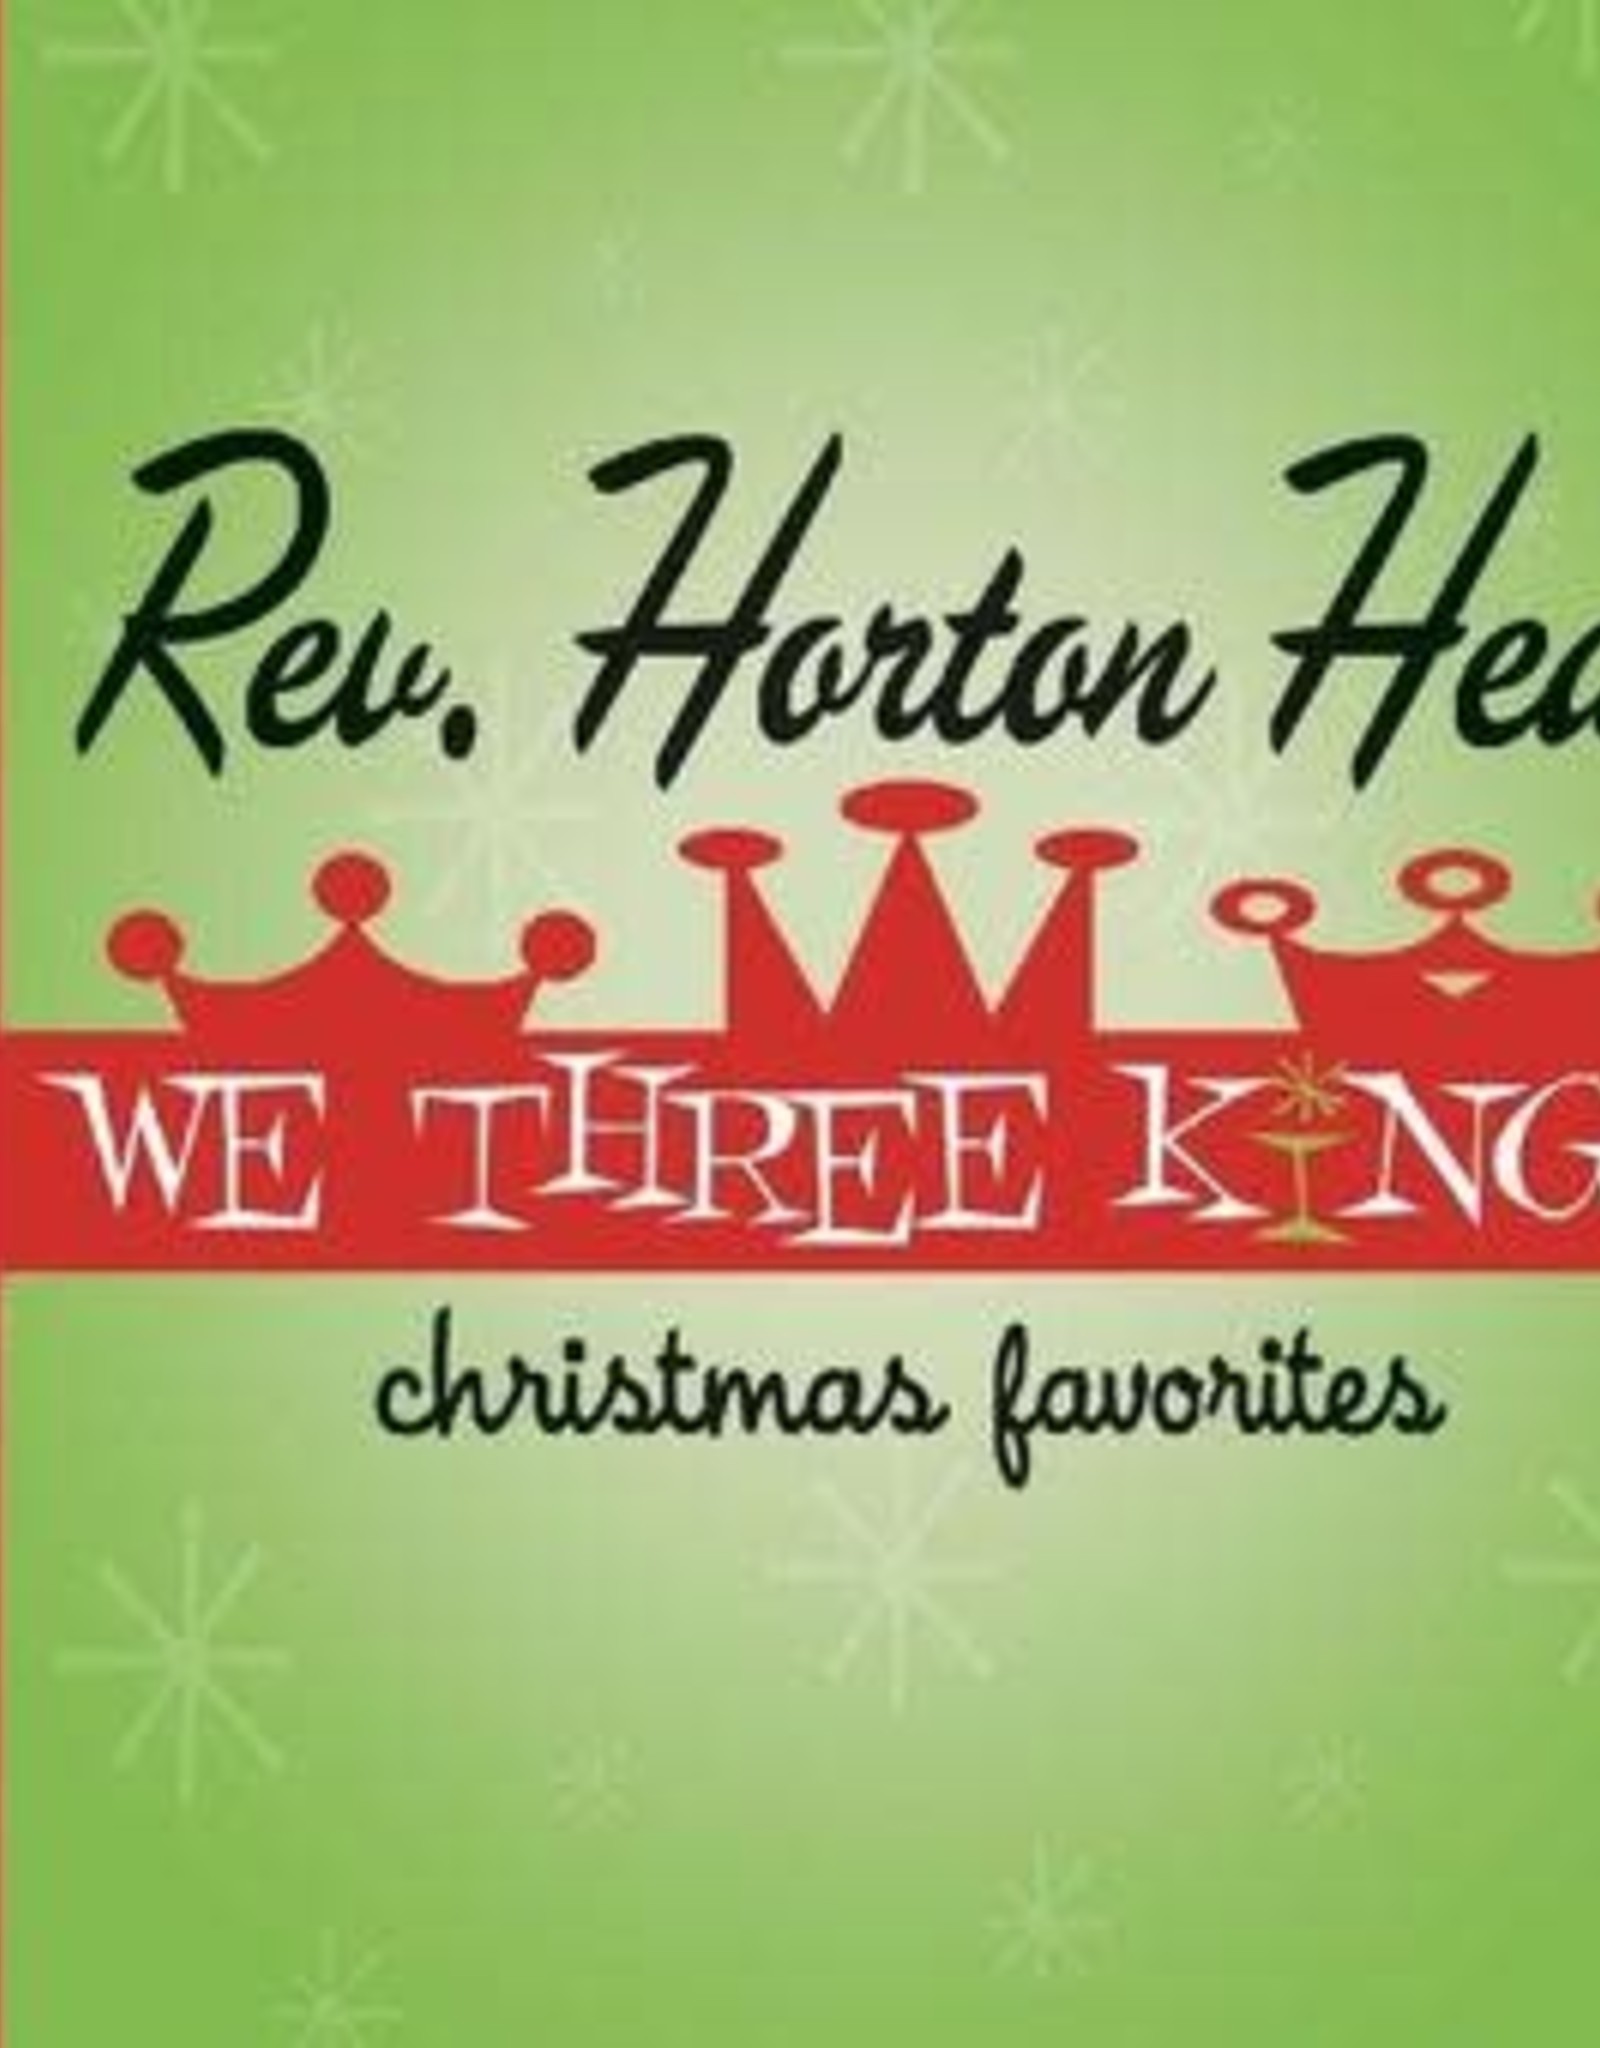 The Reverend Horton Heat - We Three Kings (RSDBF 2021)